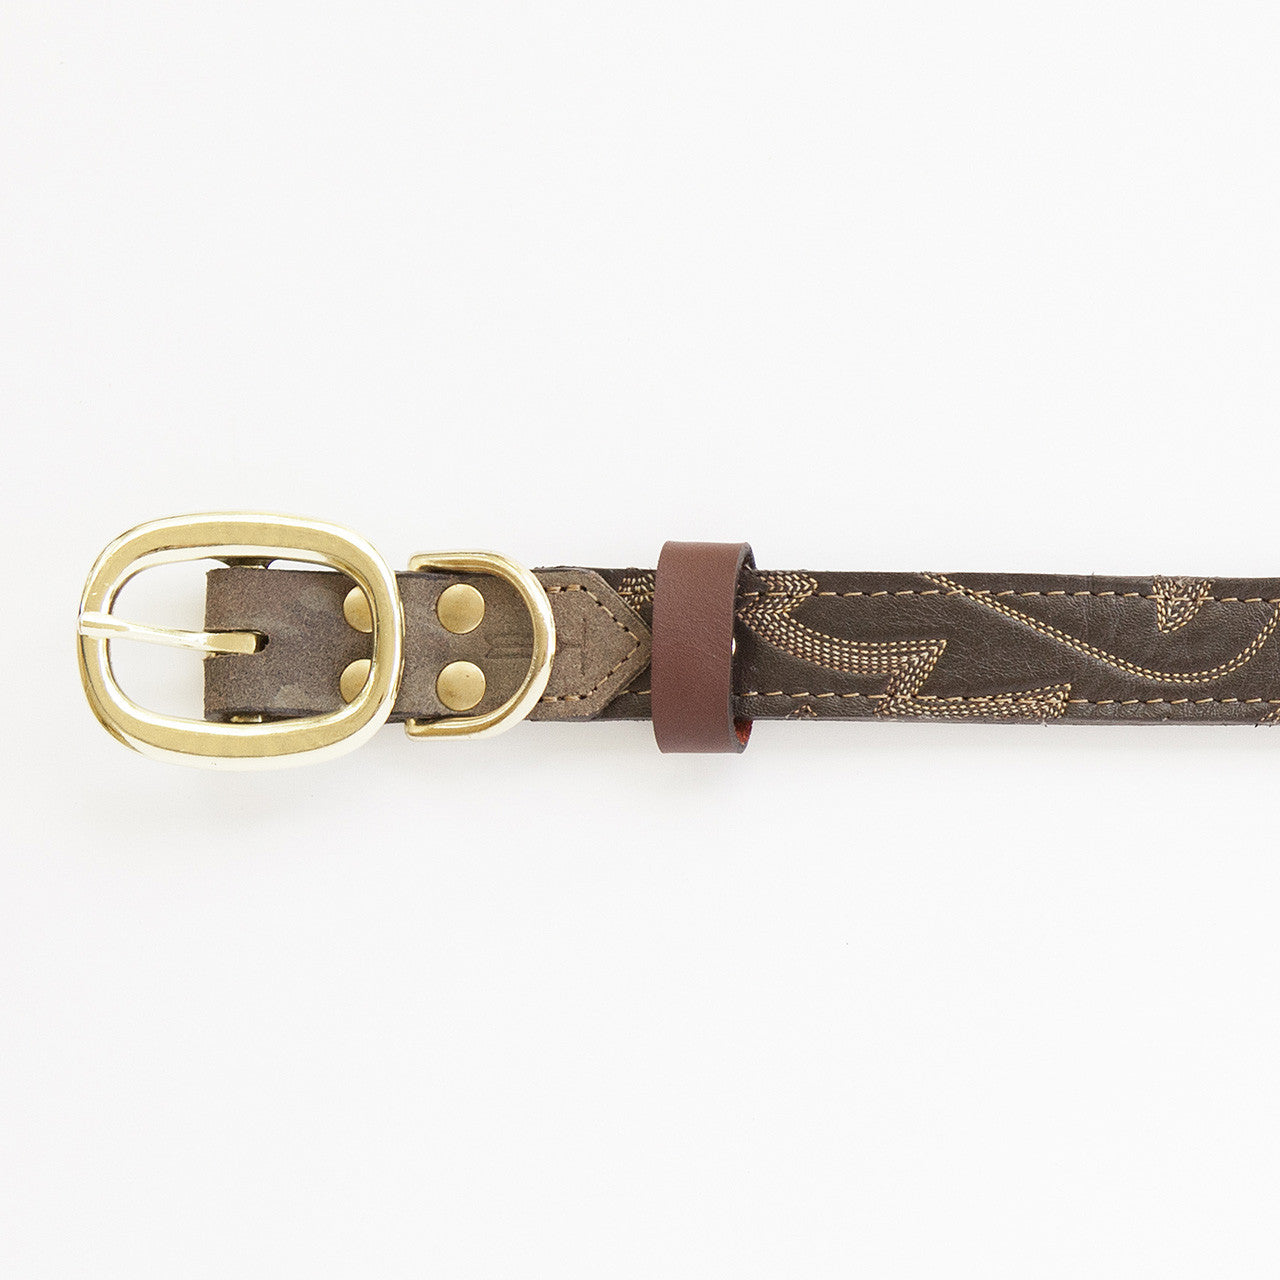 Camo Dog Collar with Dark Brown Leather + Tan and Orange Stitching (buckle)